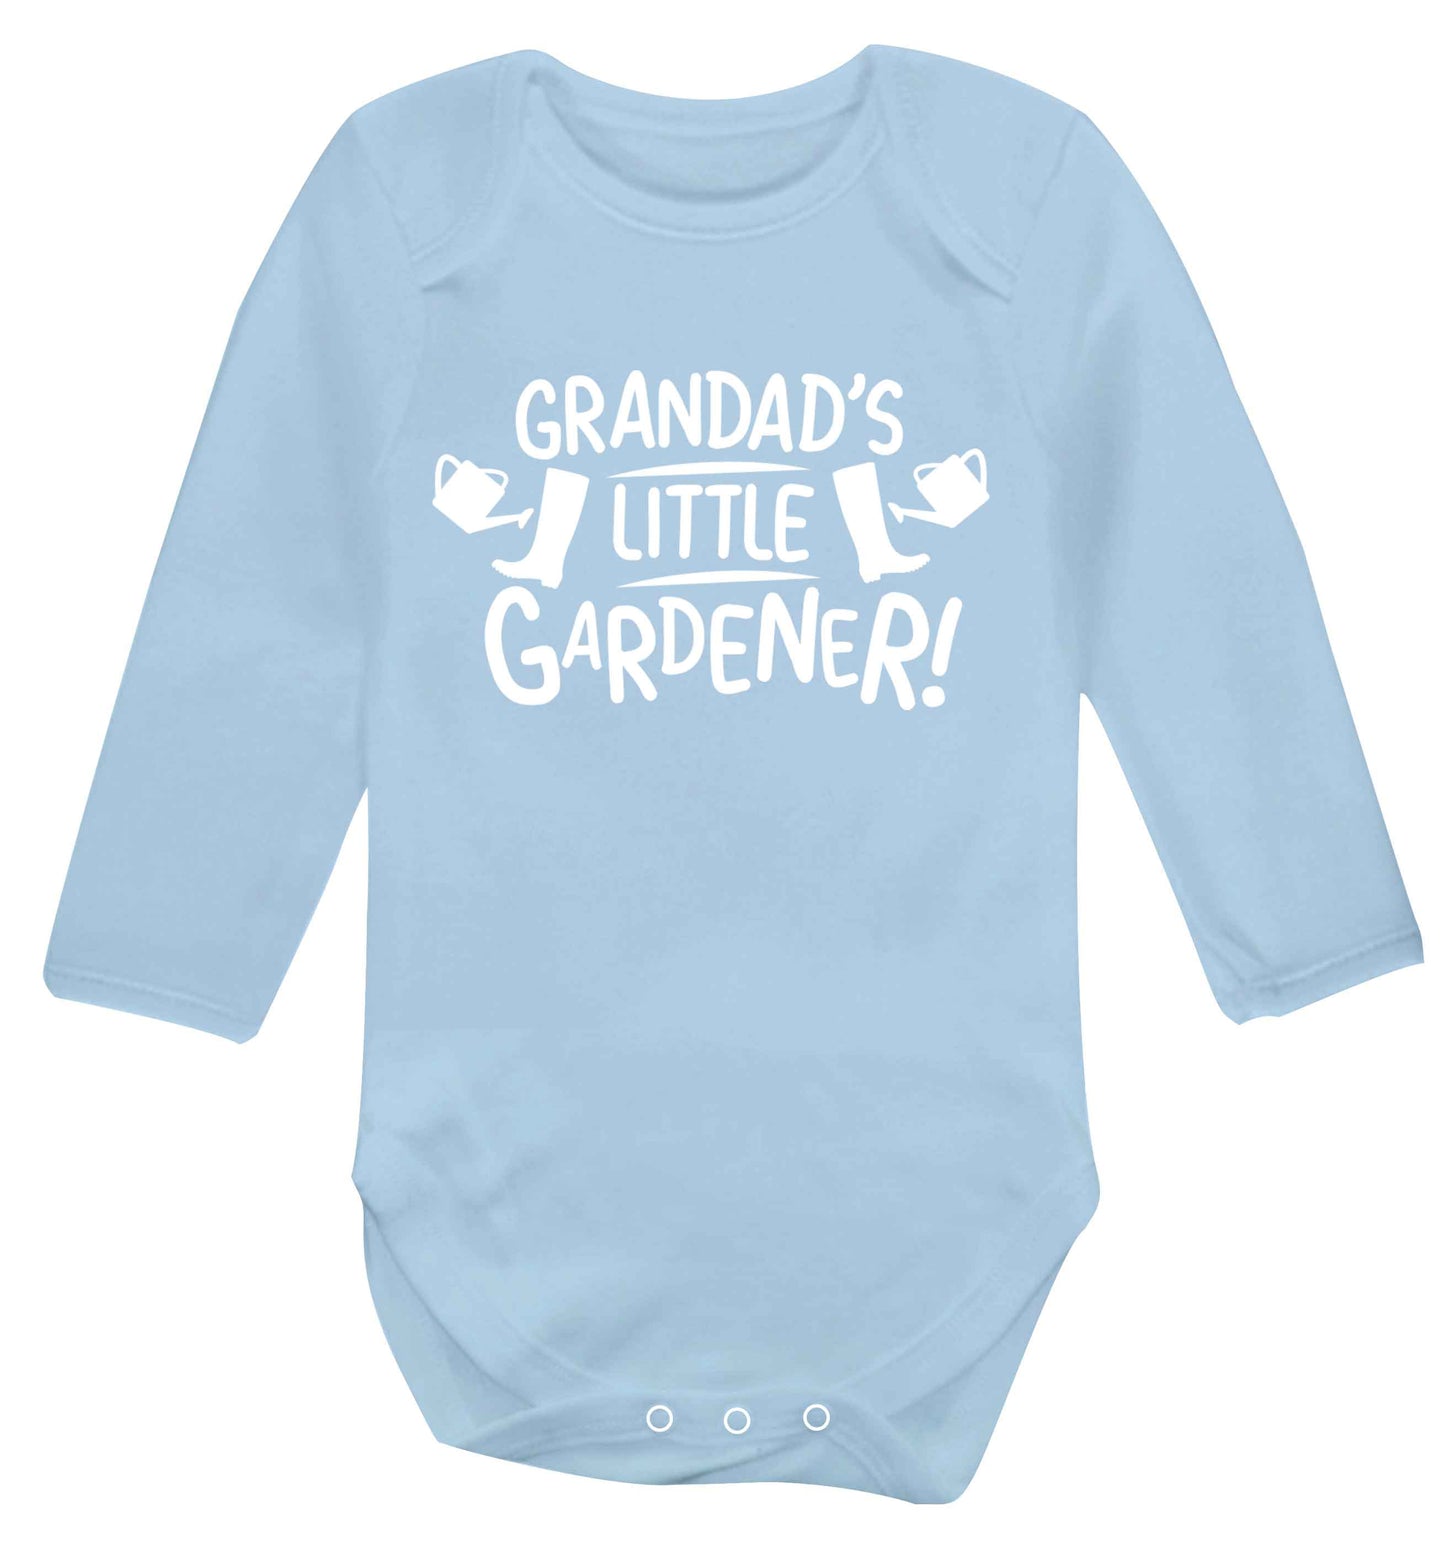 Grandad's little gardener Baby Vest long sleeved pale blue 6-12 months